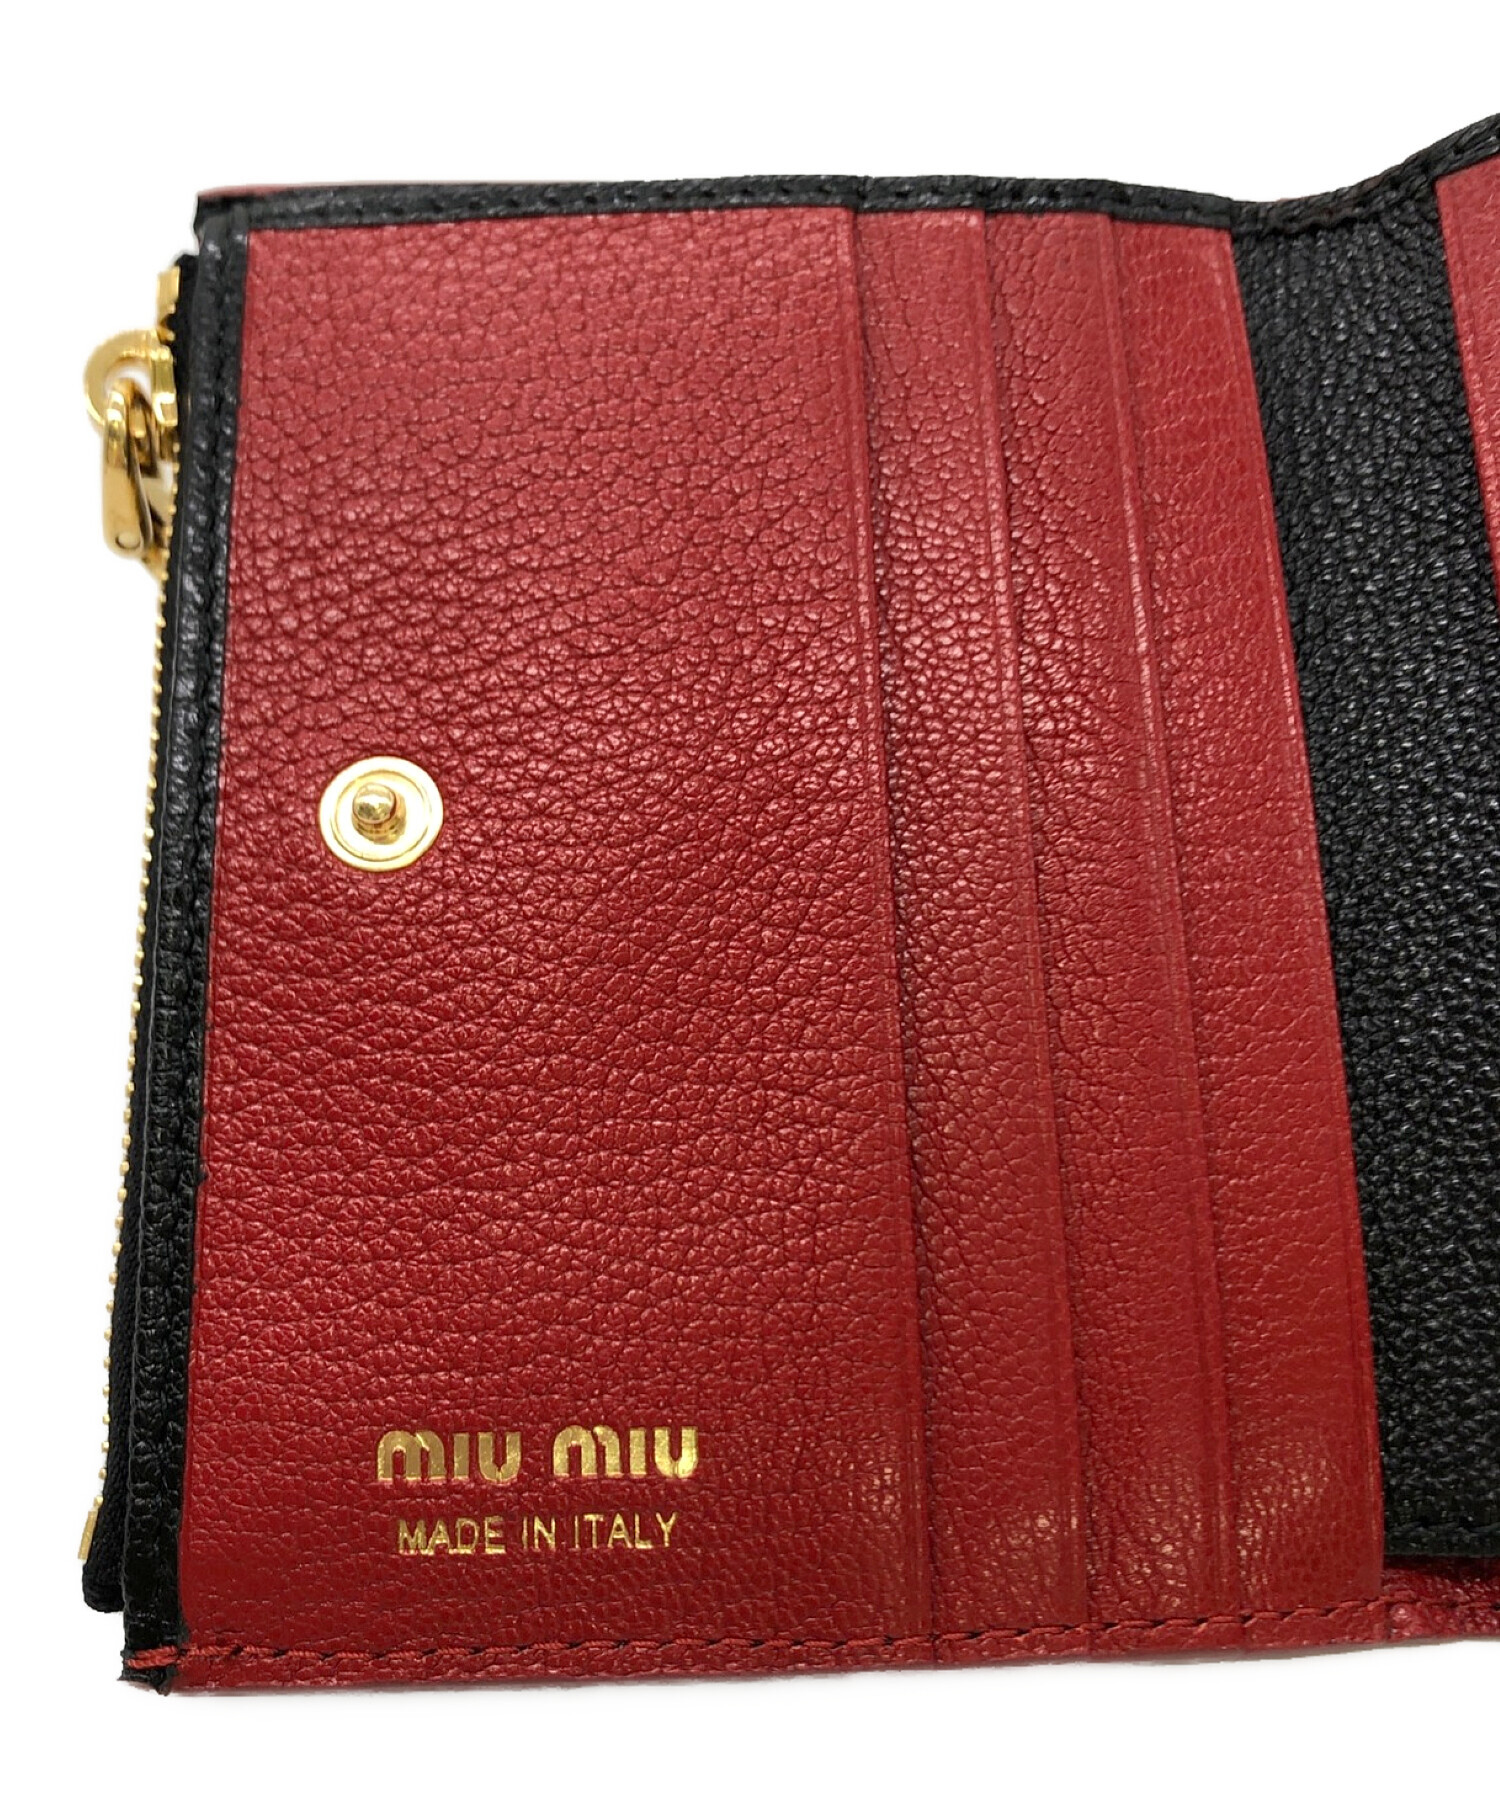 MIU MIU (ミュウミュウ) 2つ折り財布 ブラック×レッド 未使用品